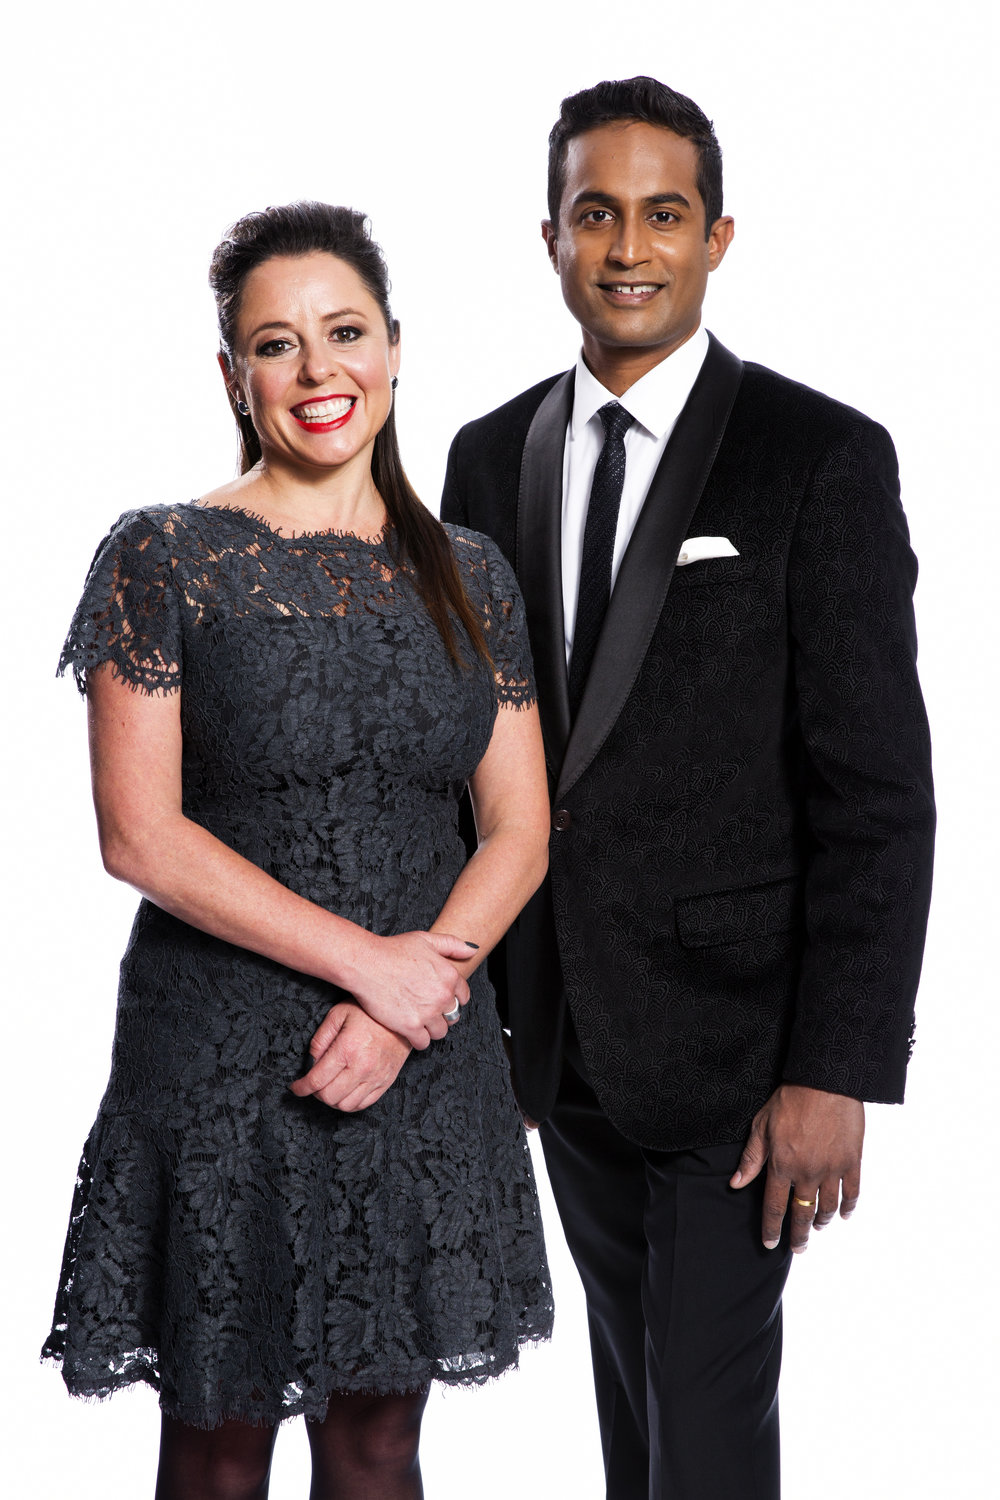 Myf Warhurst & Jeremy Fernandez host the Australian Of The Year Awards Image - ABC